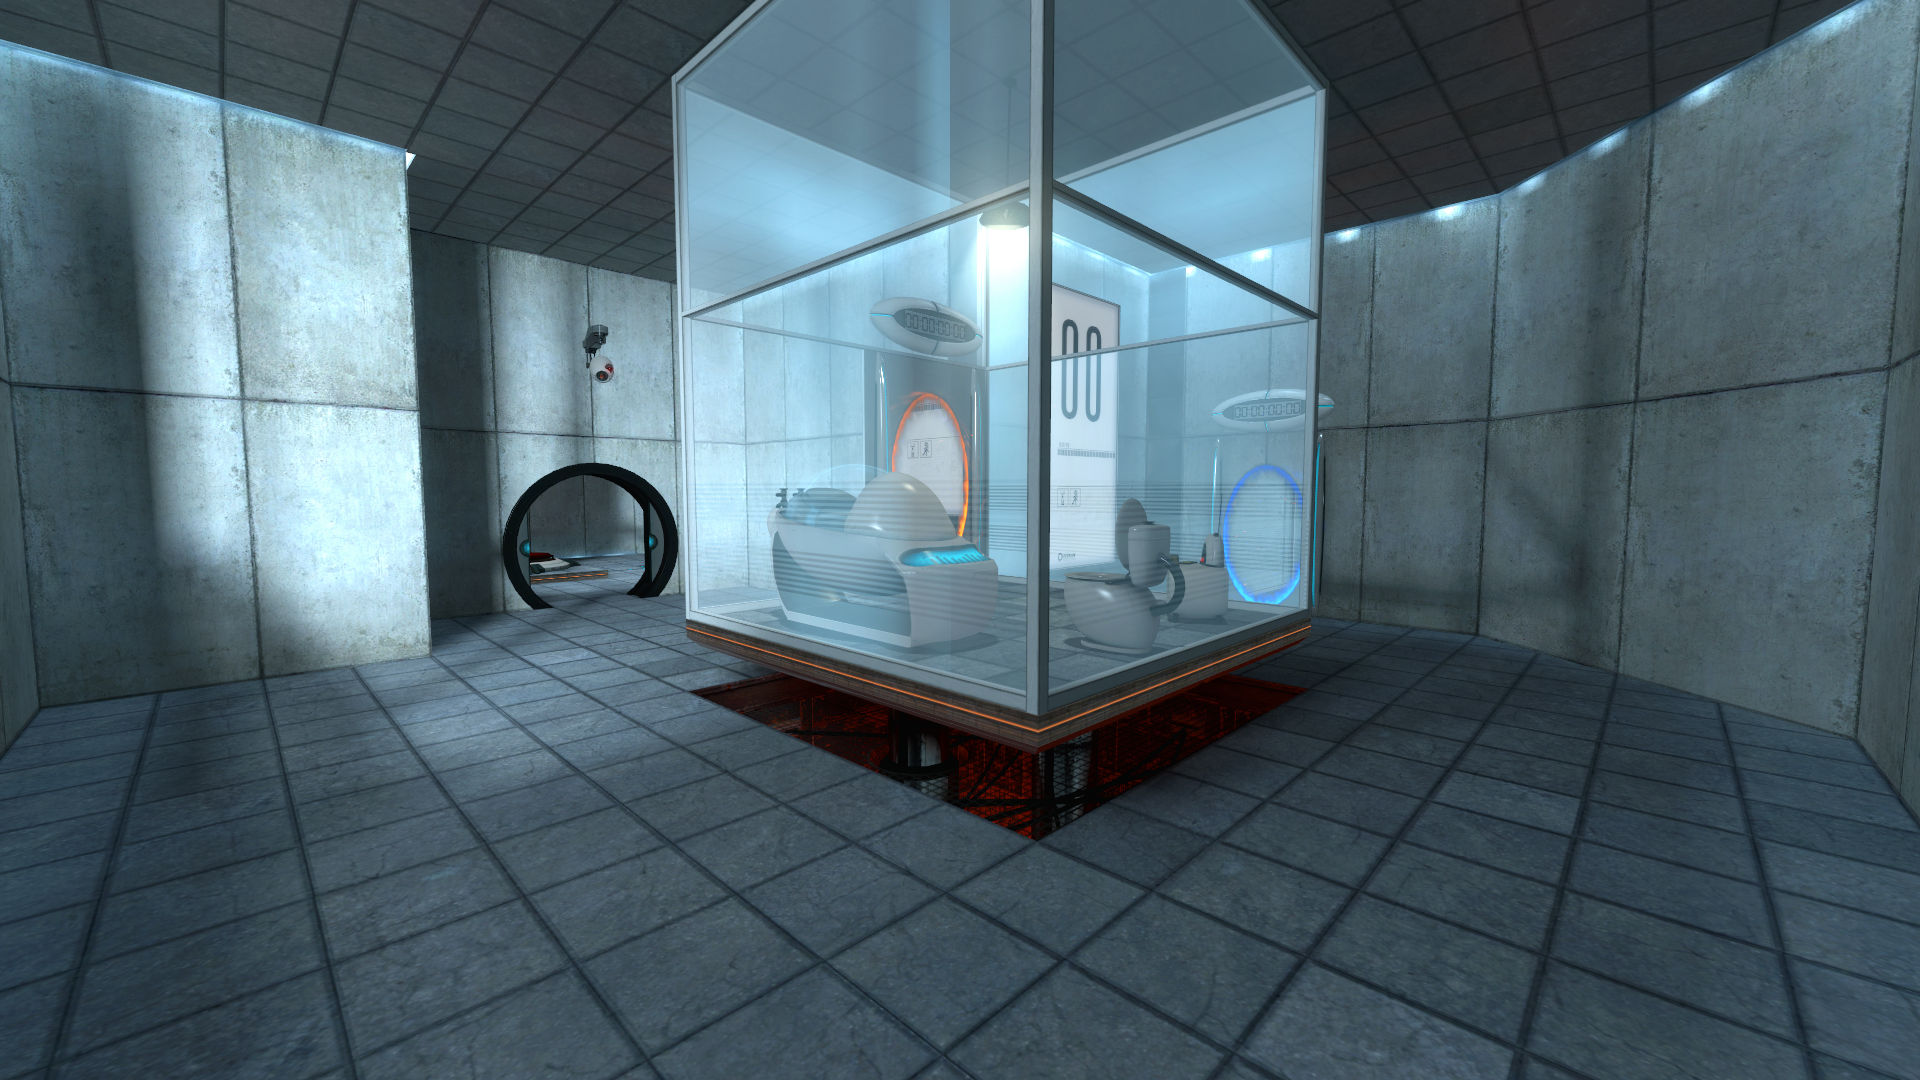 Усла портал. Portal 2 комната в начале. Portal 2 тестовая камера 1. Portal 1 и Portal 2. Test Chamber 00 Portal 2.